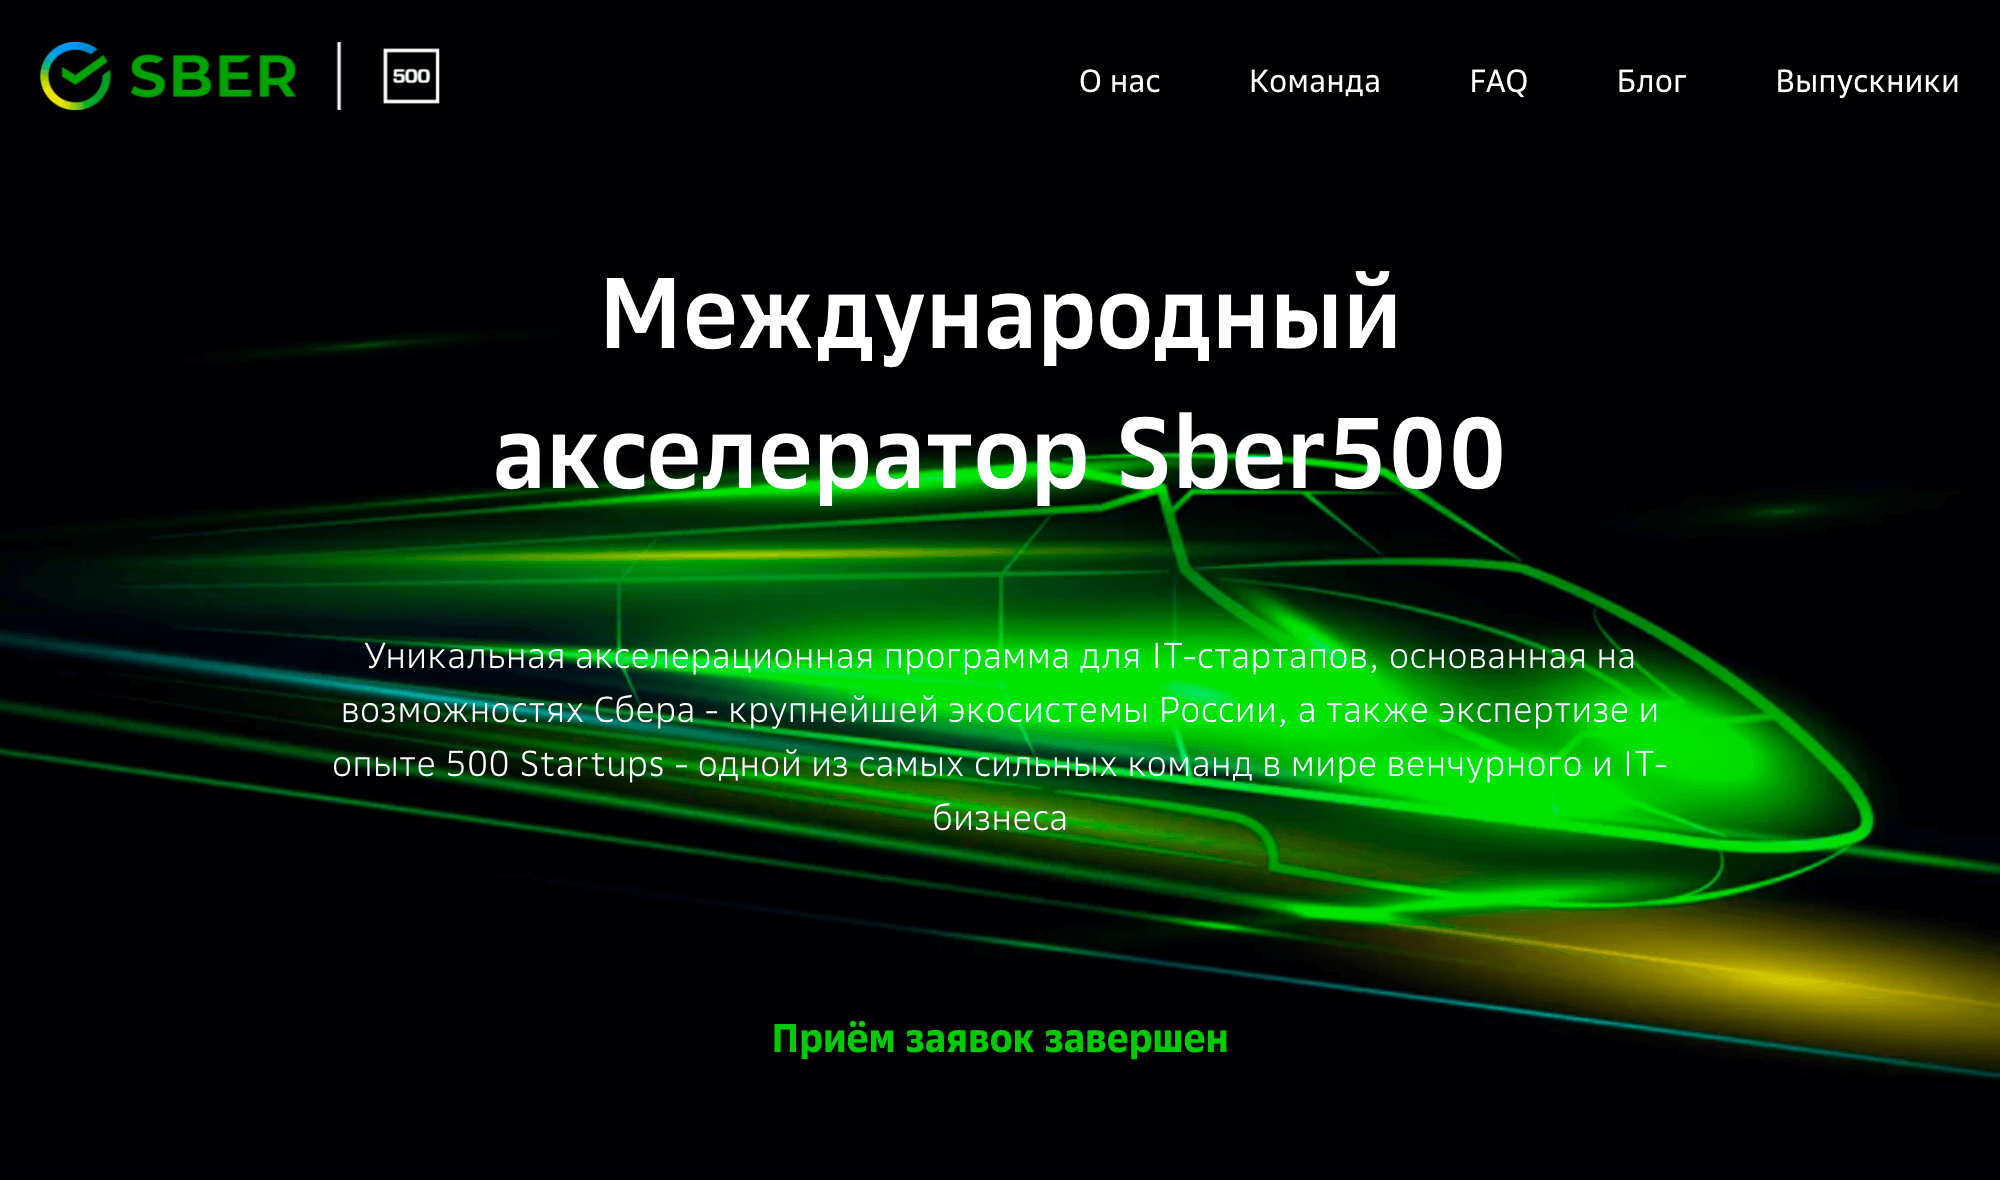 Сайт акселератора Sber500. Источник: sberbank-500.ru